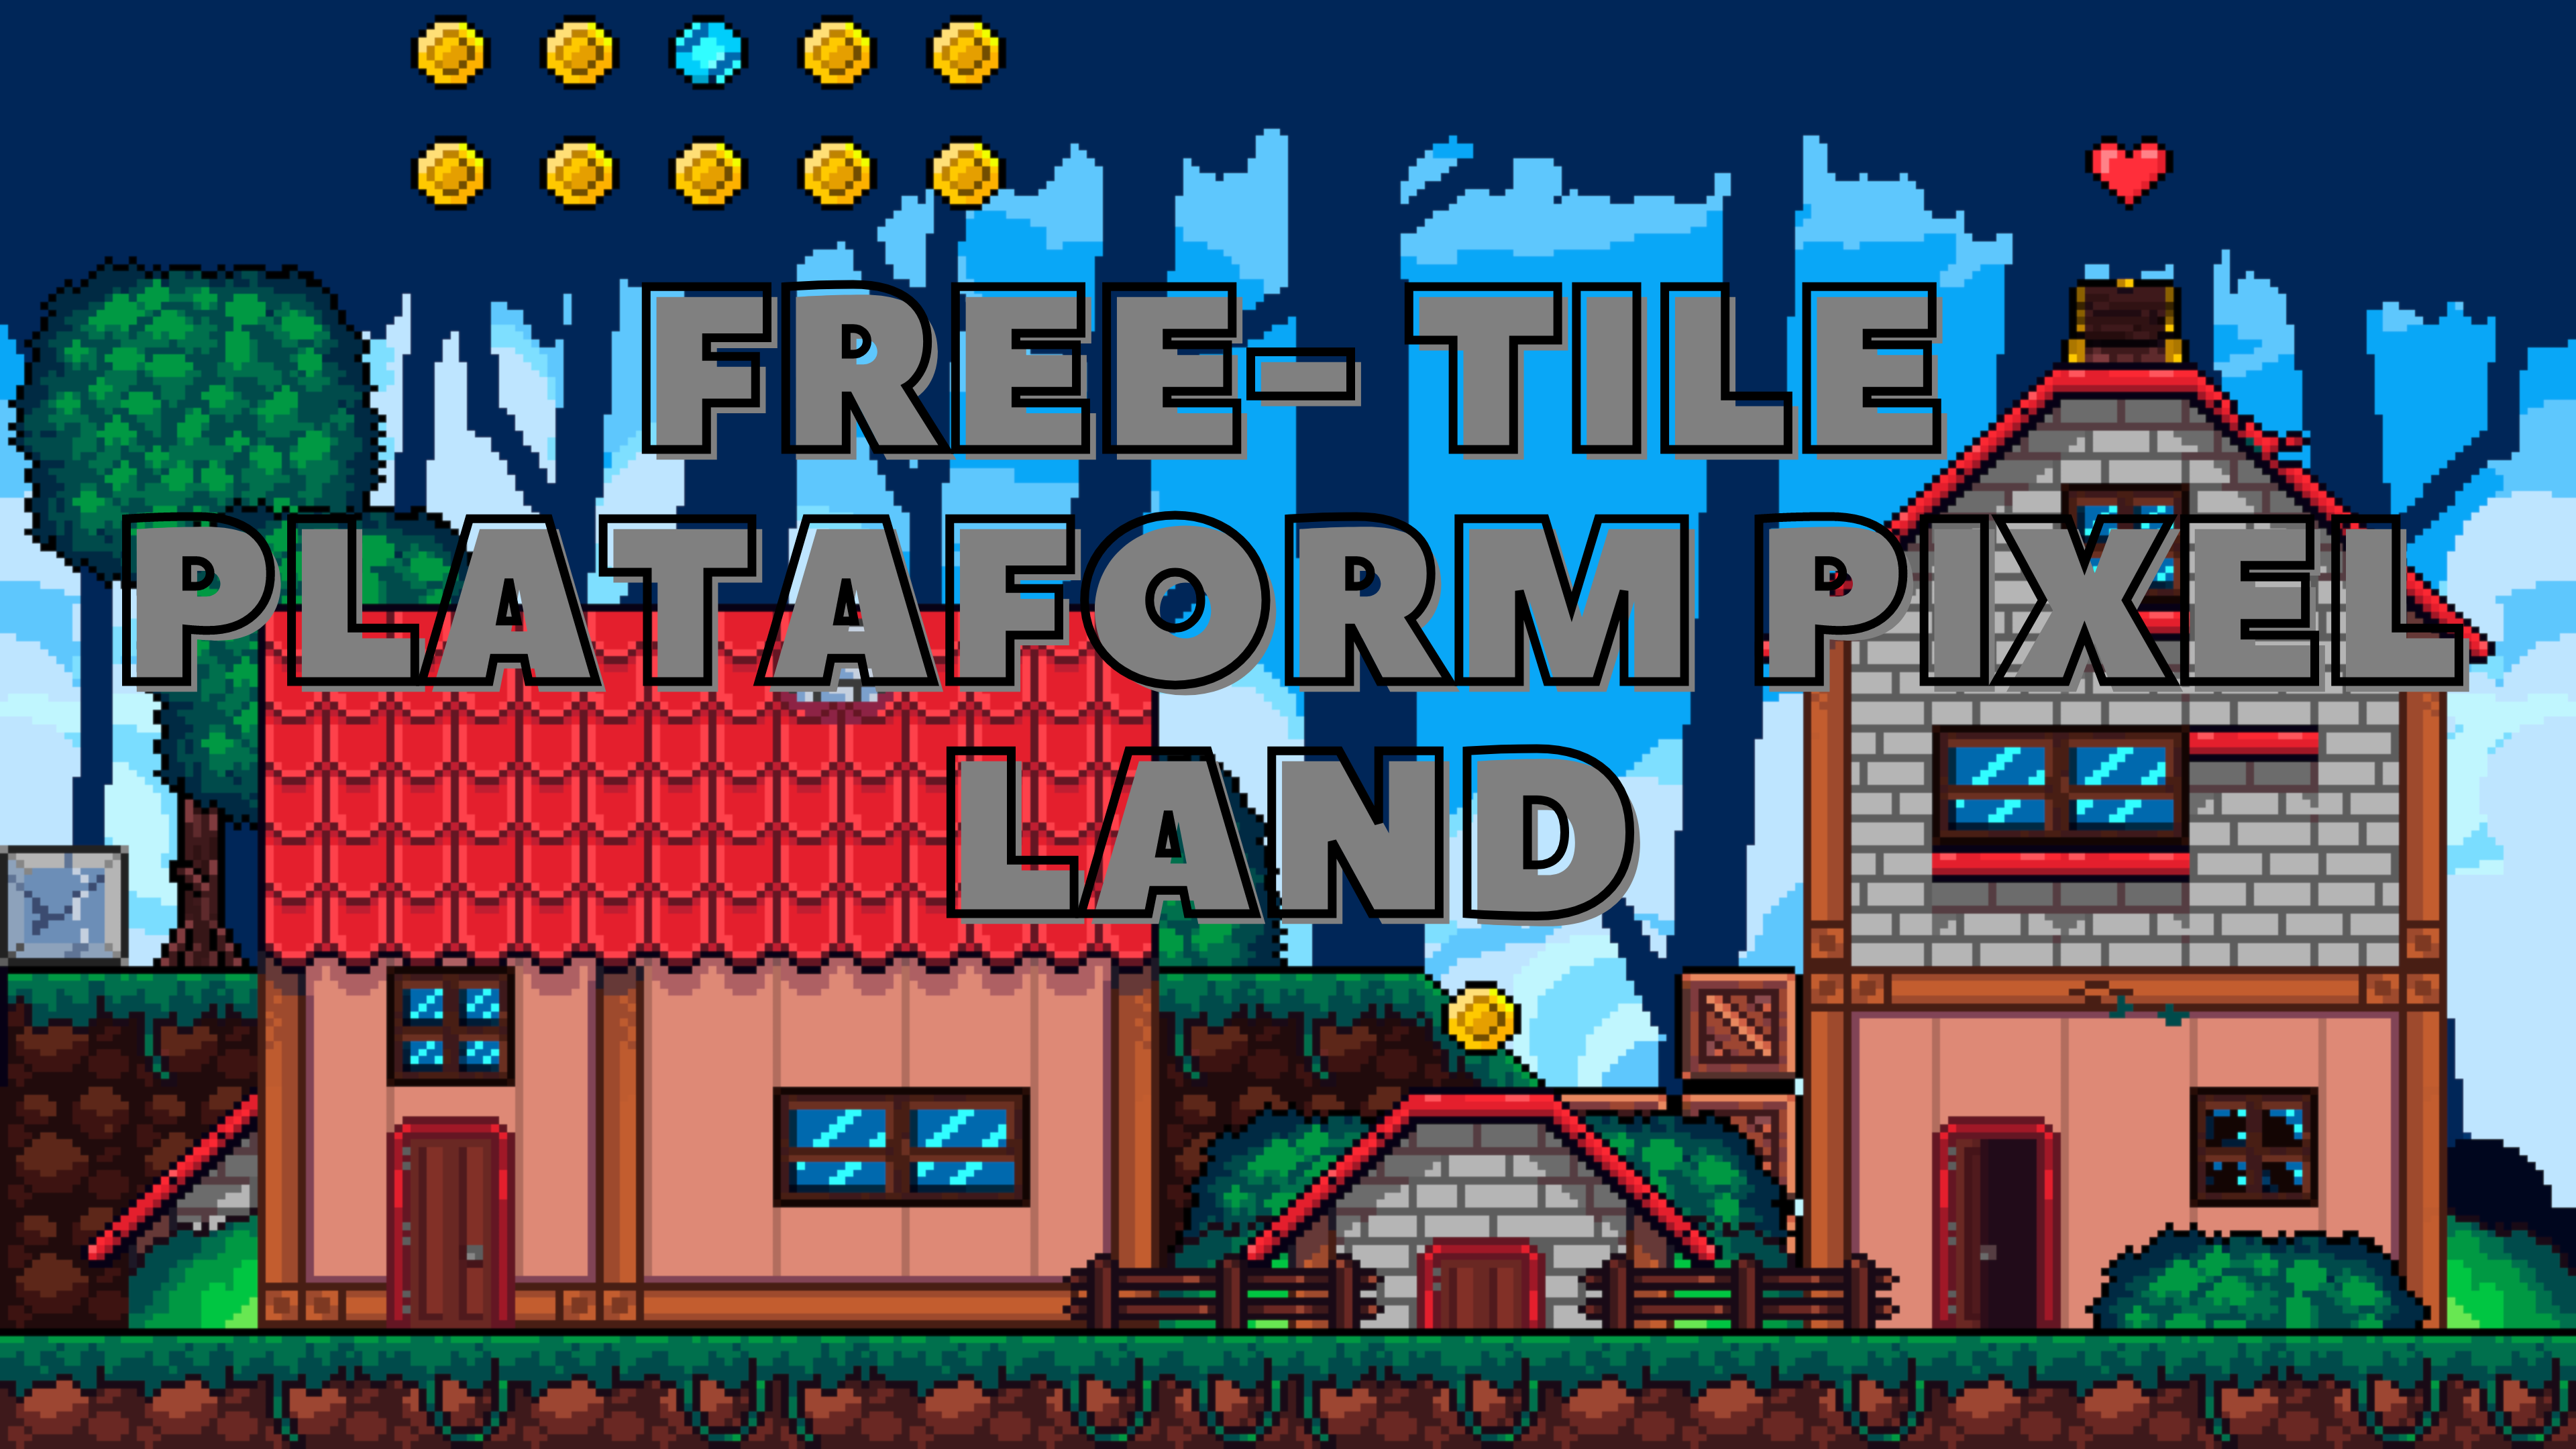 Free|| Tile Plataform pixel land